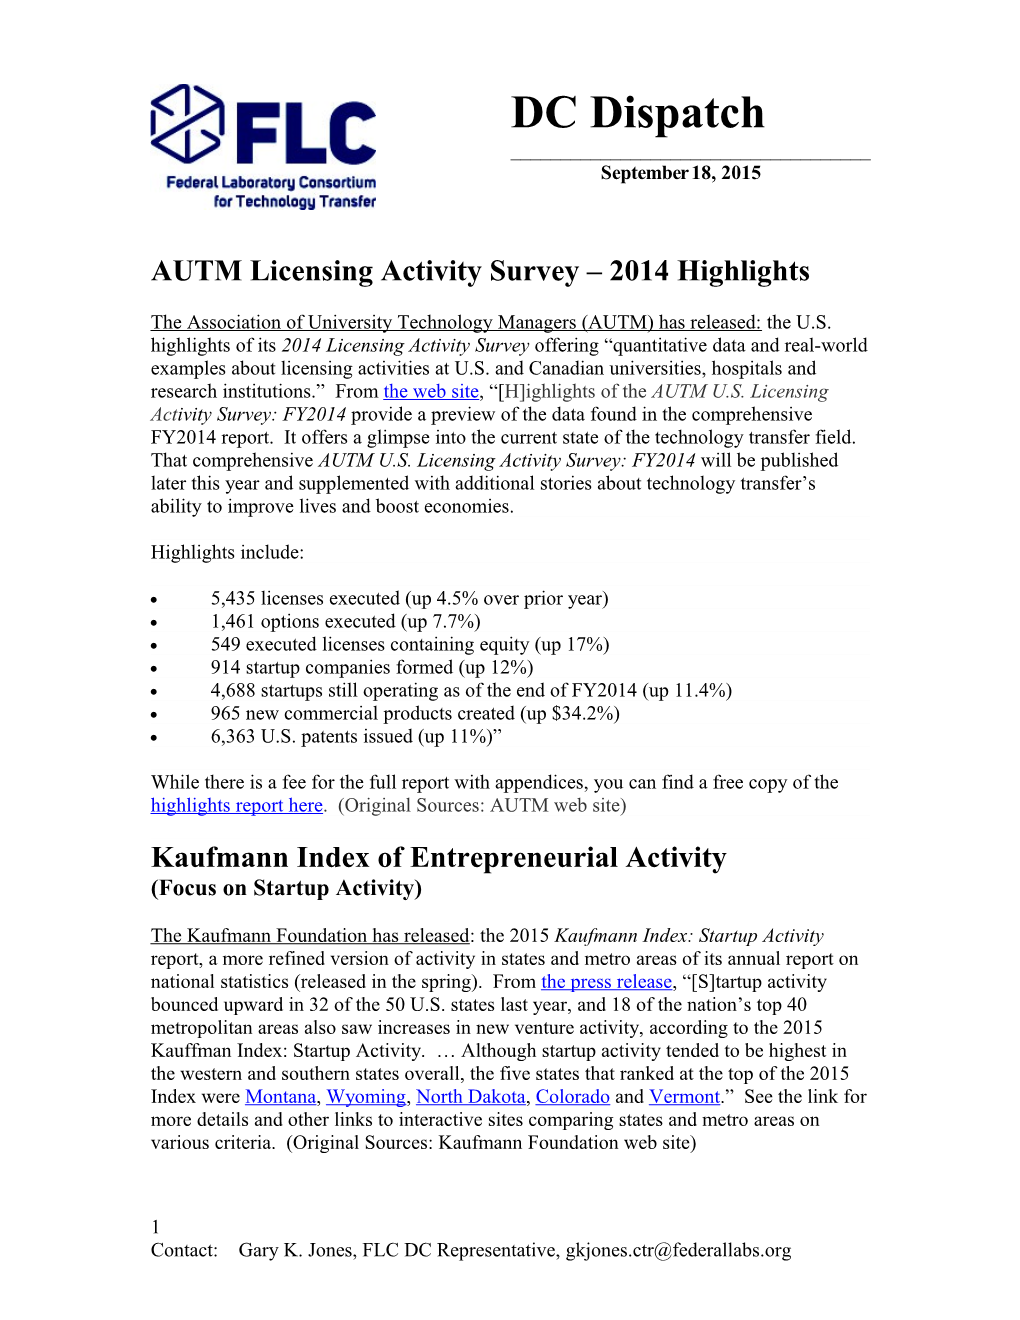 AUTM Licensing Activity Survey 2014 Highlights